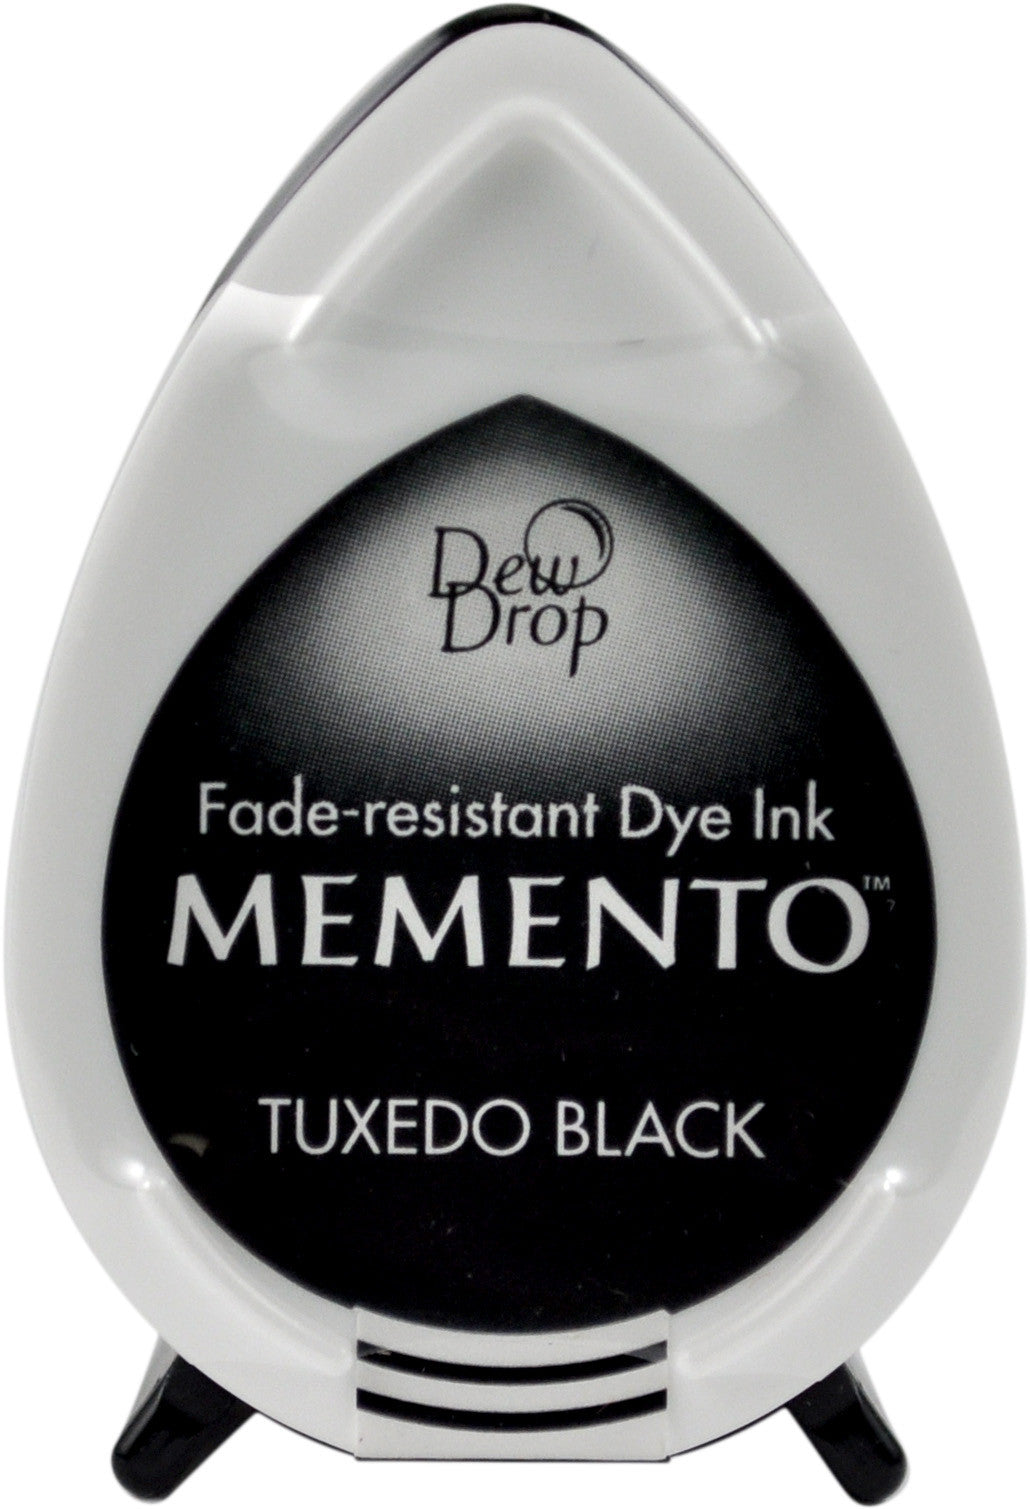 memento tuxedo black dew drop